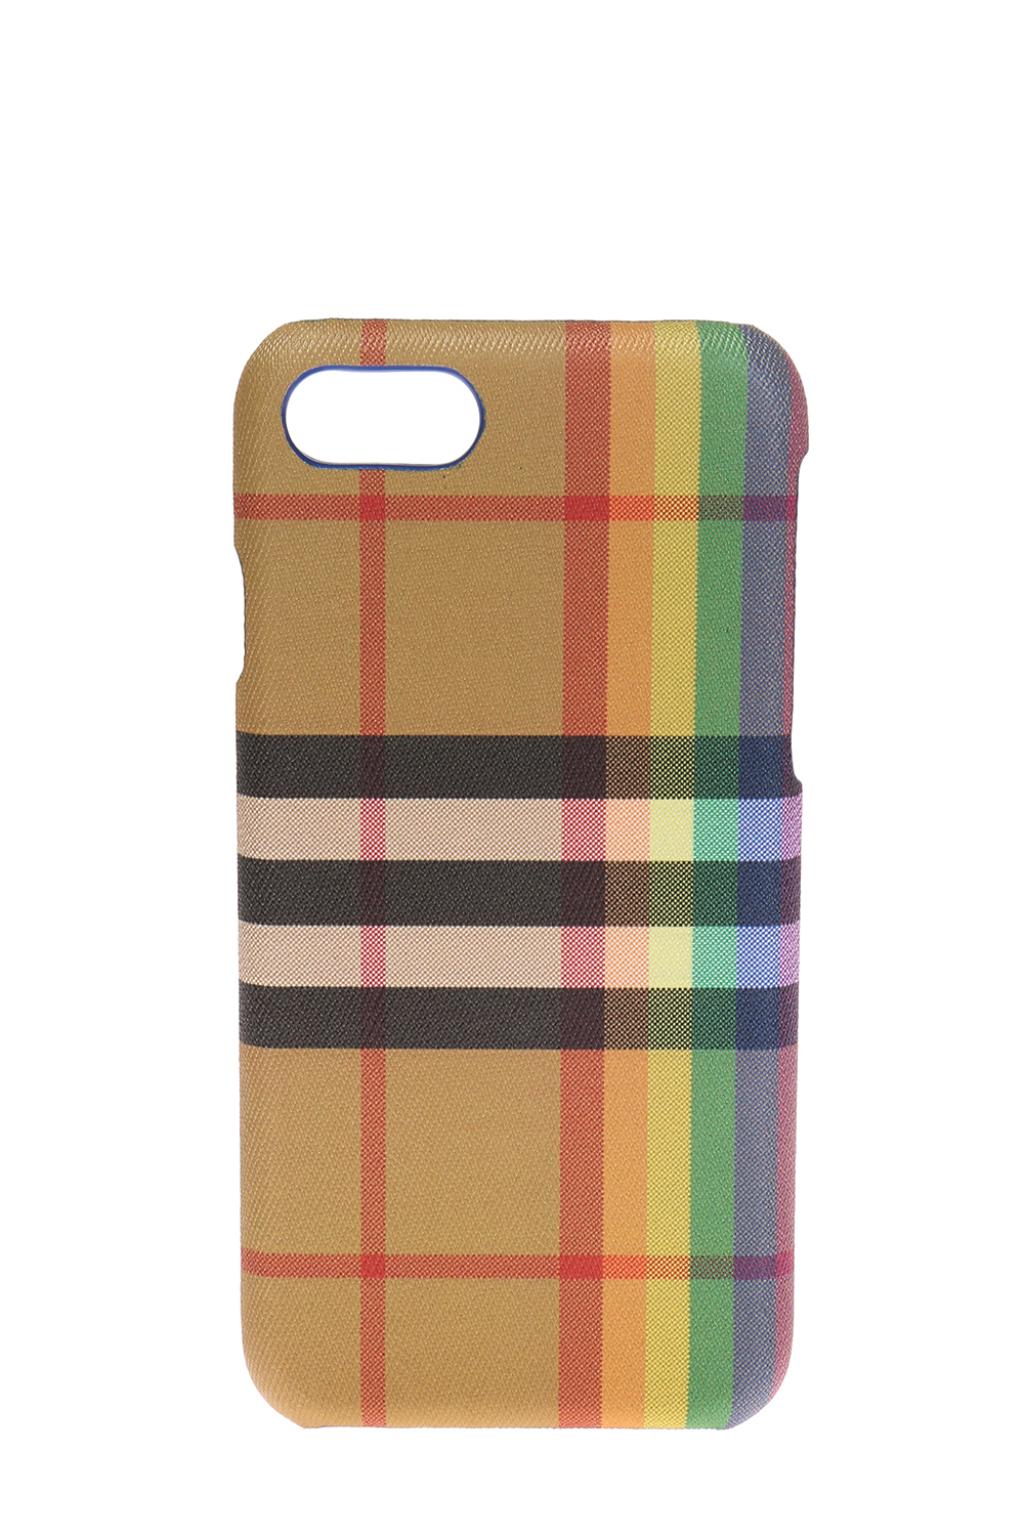 iphone 8 case burberry